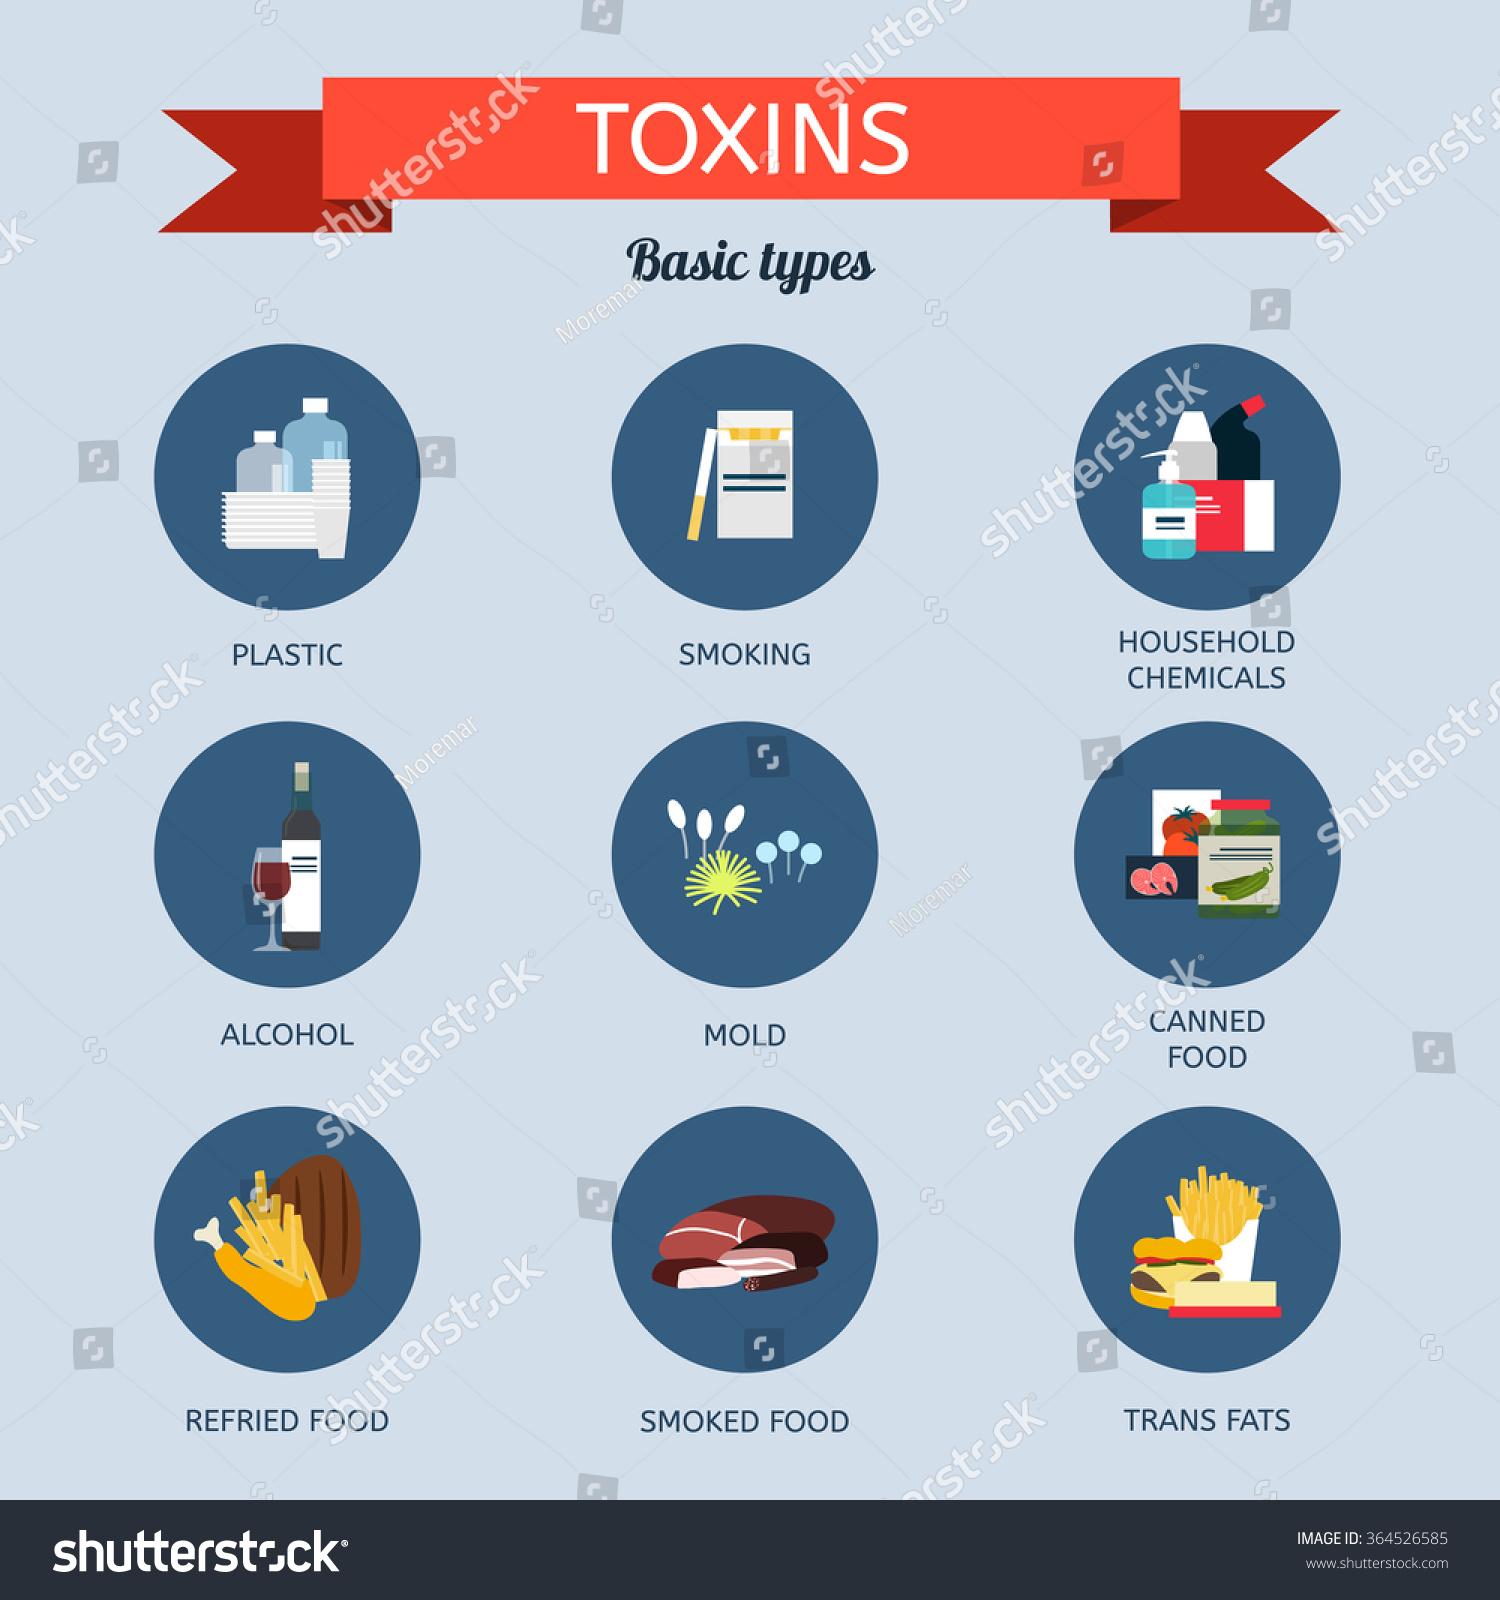 toxine in the body)